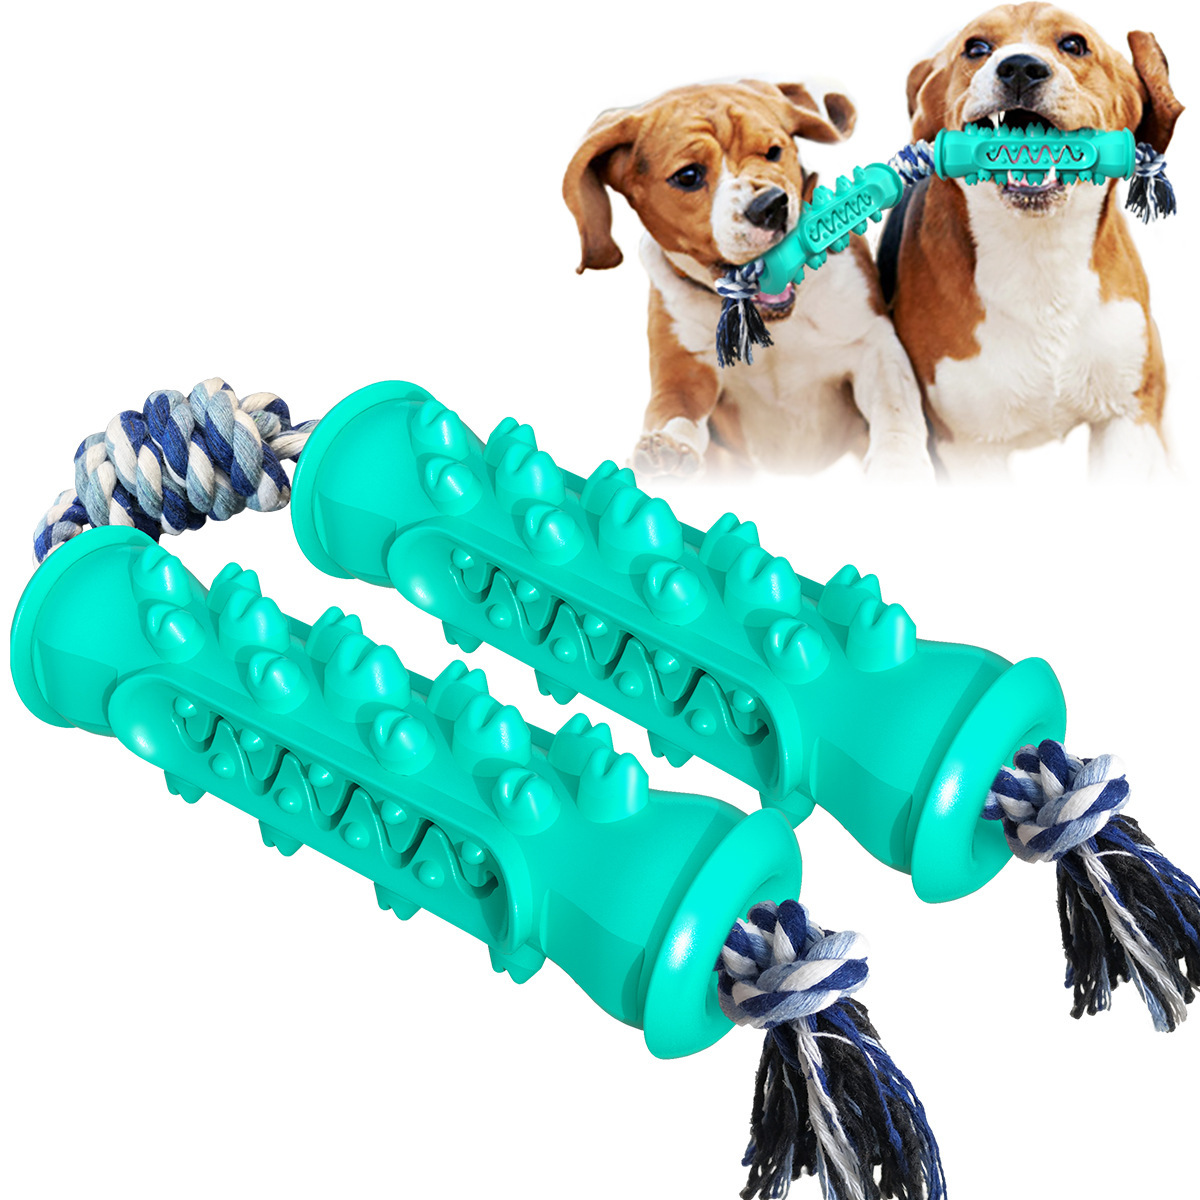 Dog toothbrush molar Rod dog toy training ball